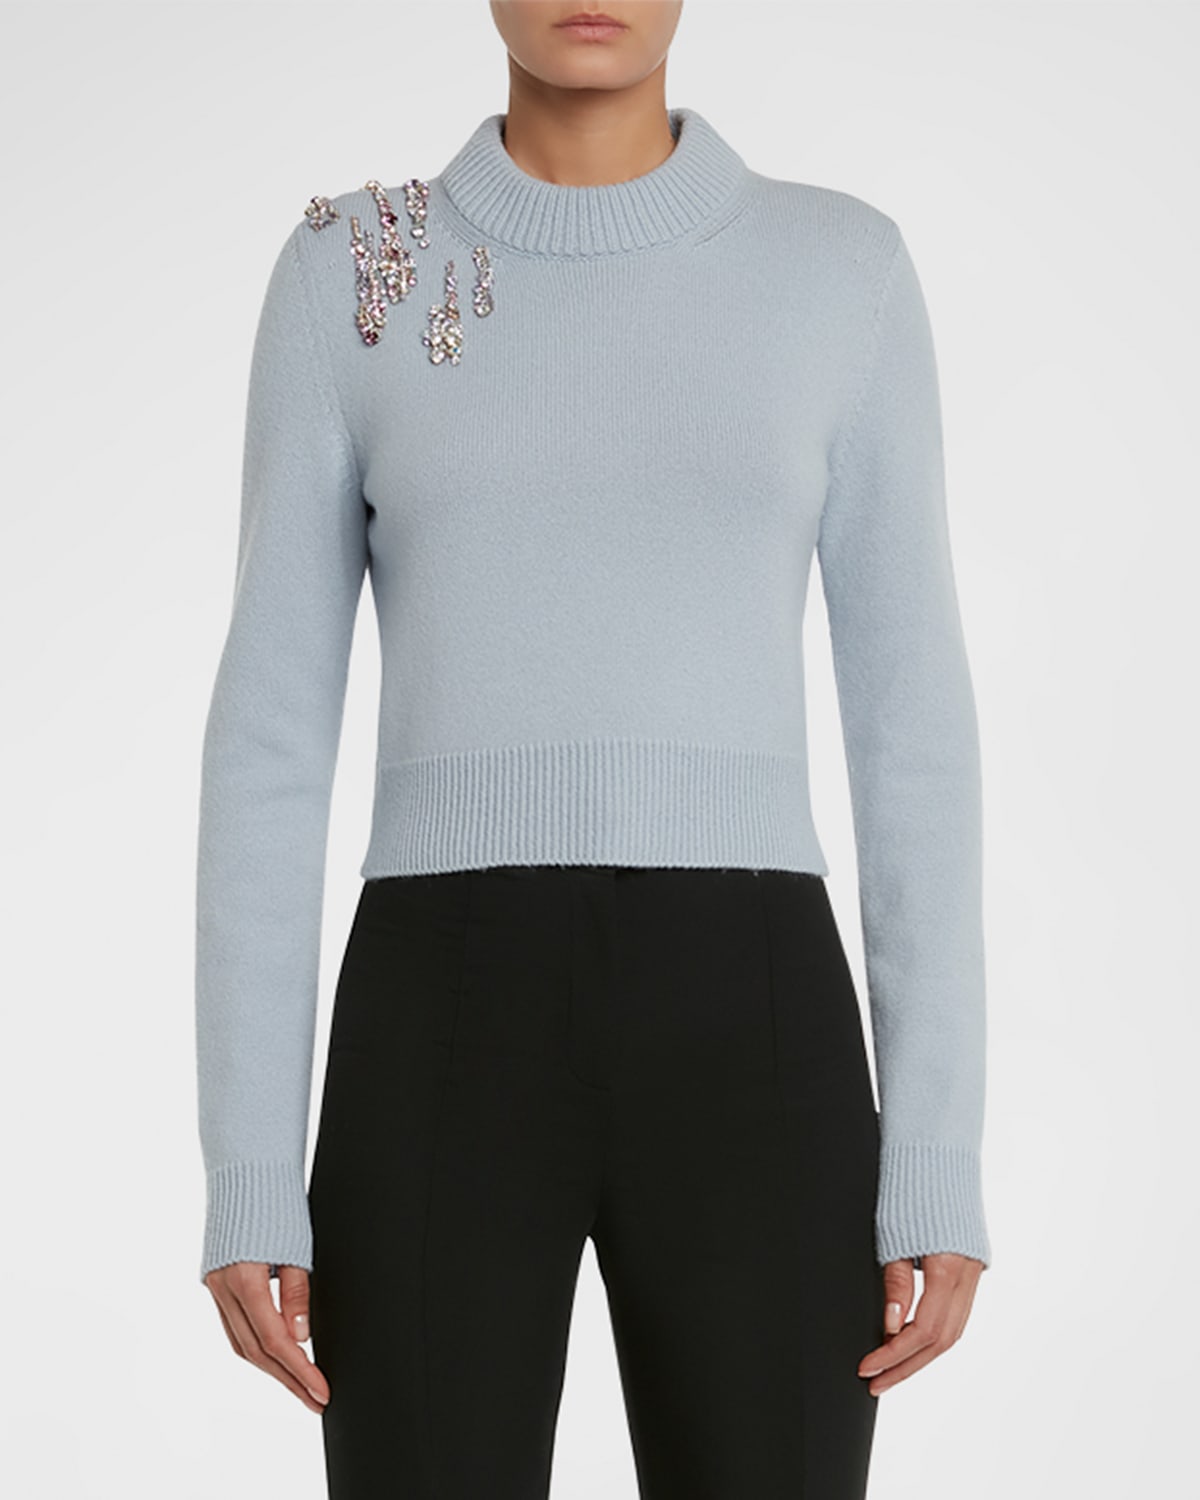 Crystal Embellished Cashmere Crop Sweater